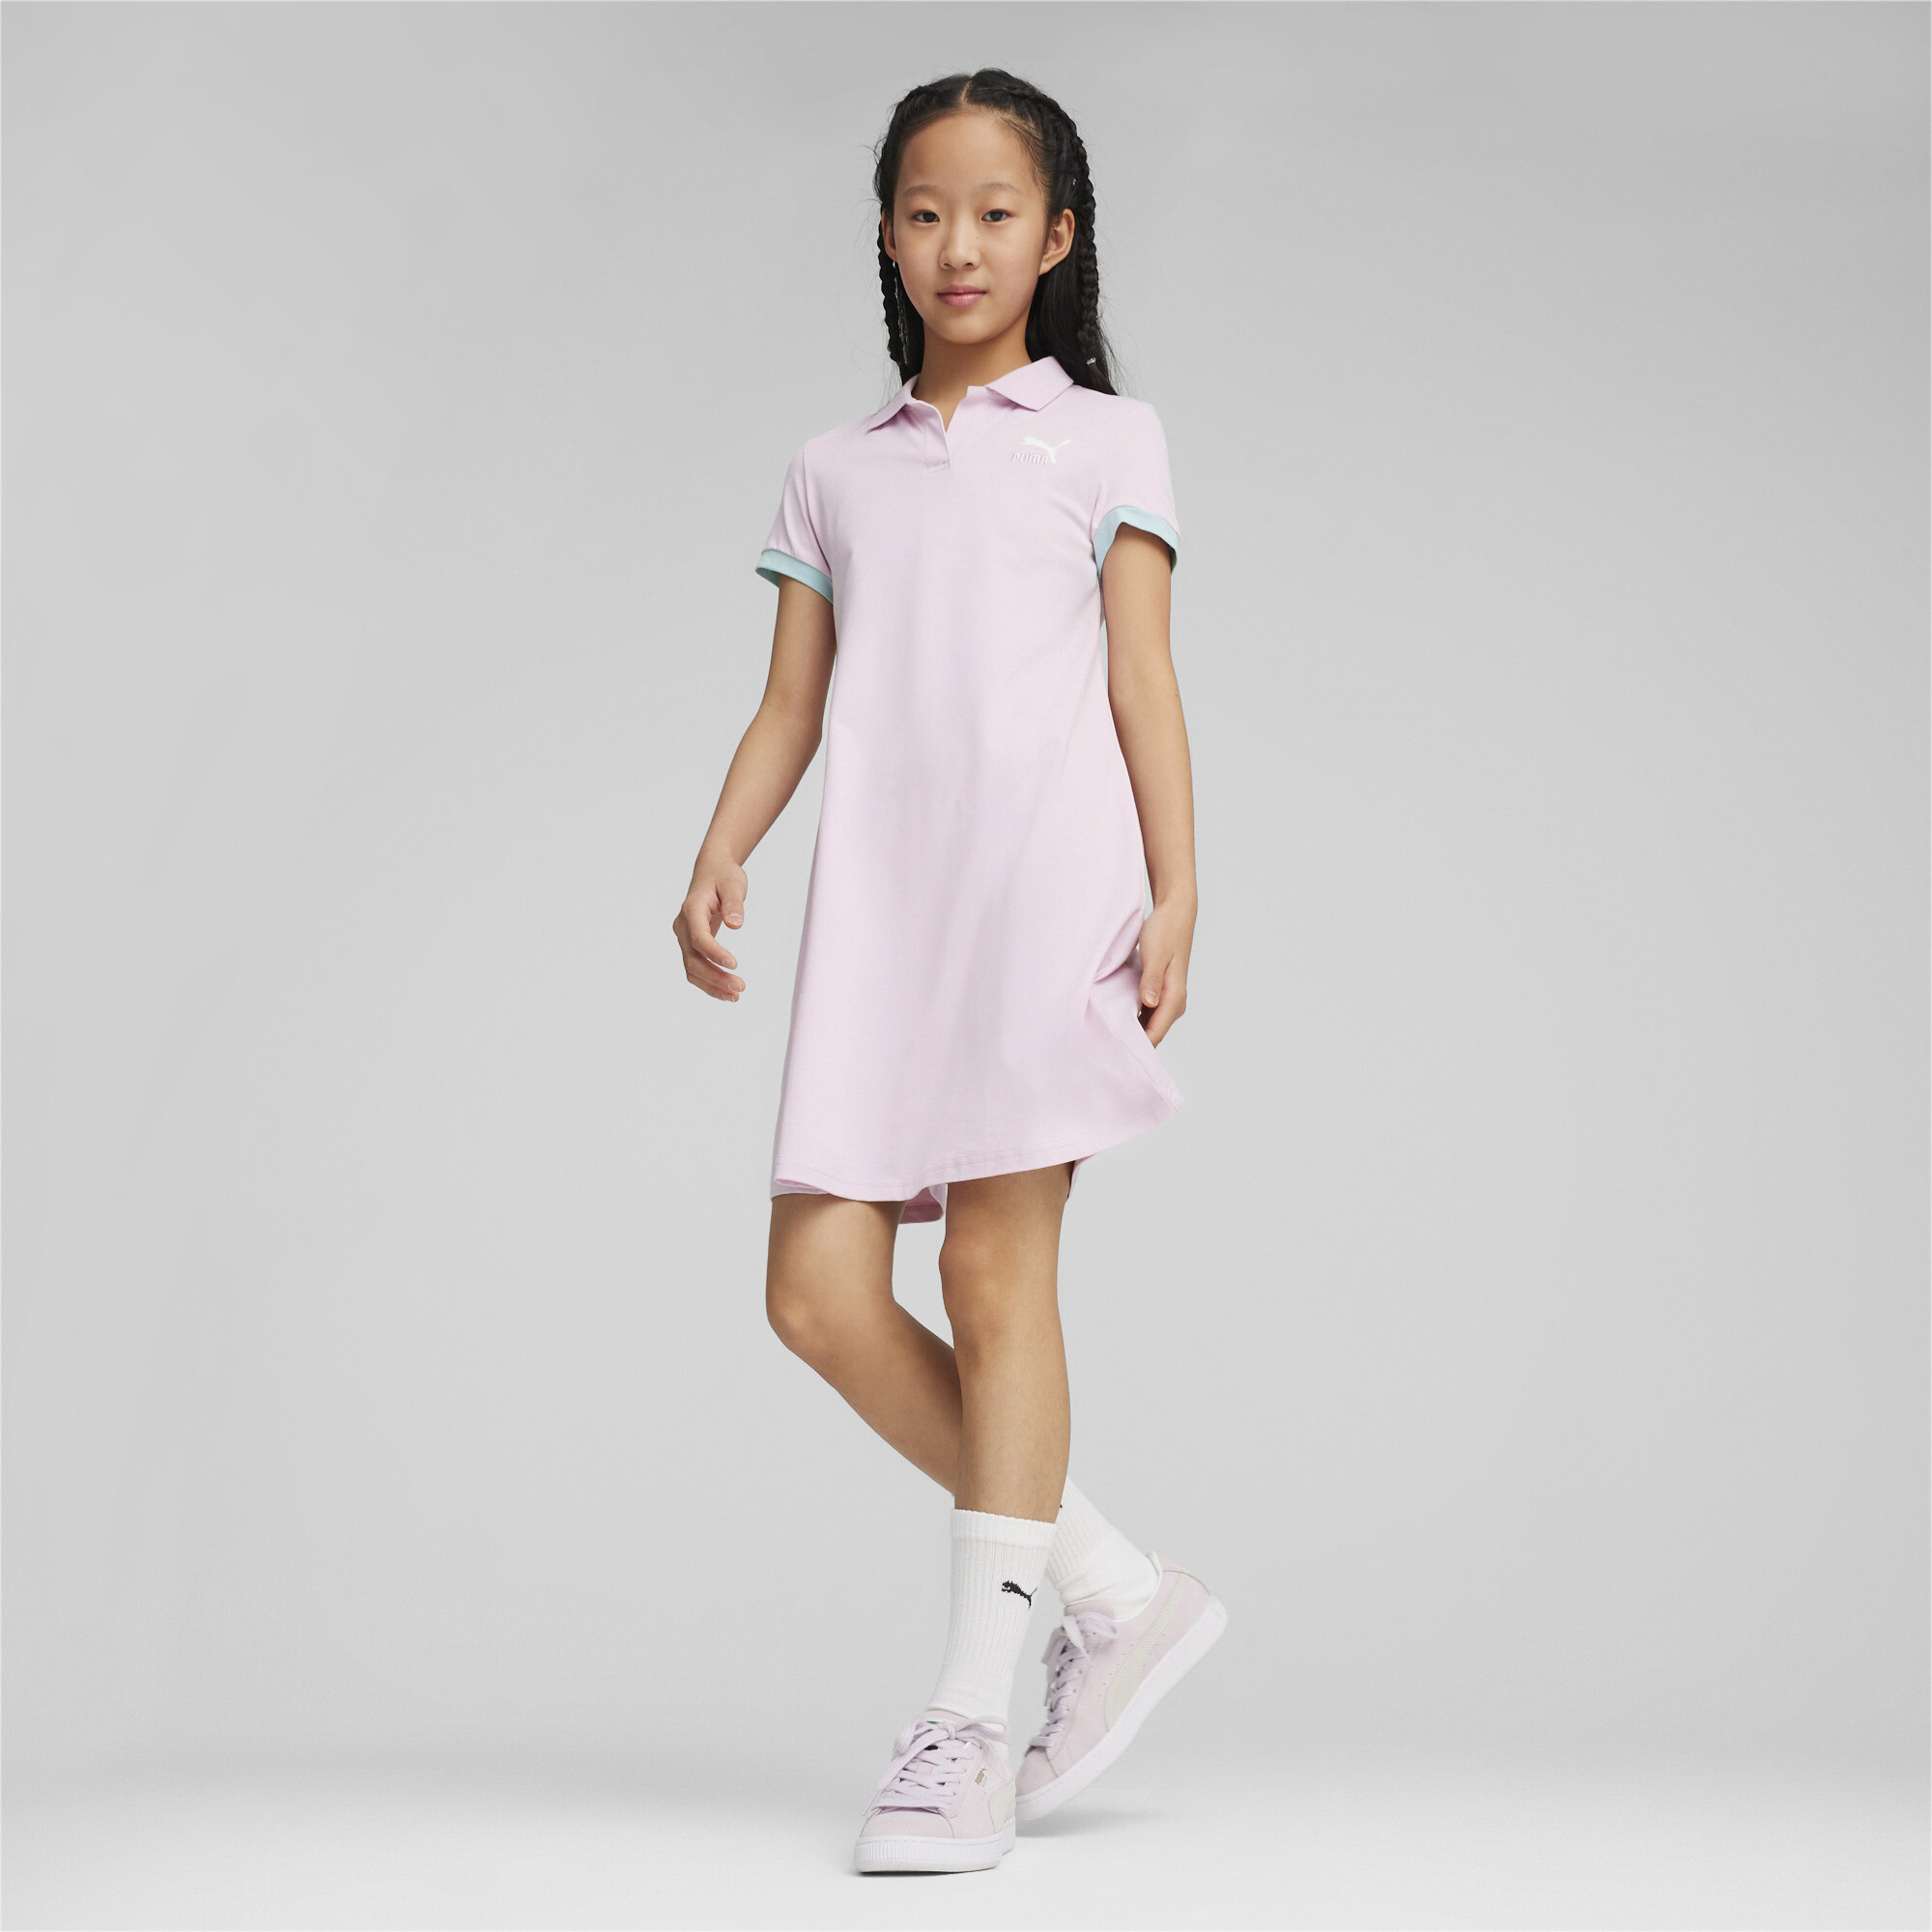 PUMA CLASSICS Match Point Dress In Purple, Size 15-16 Youth